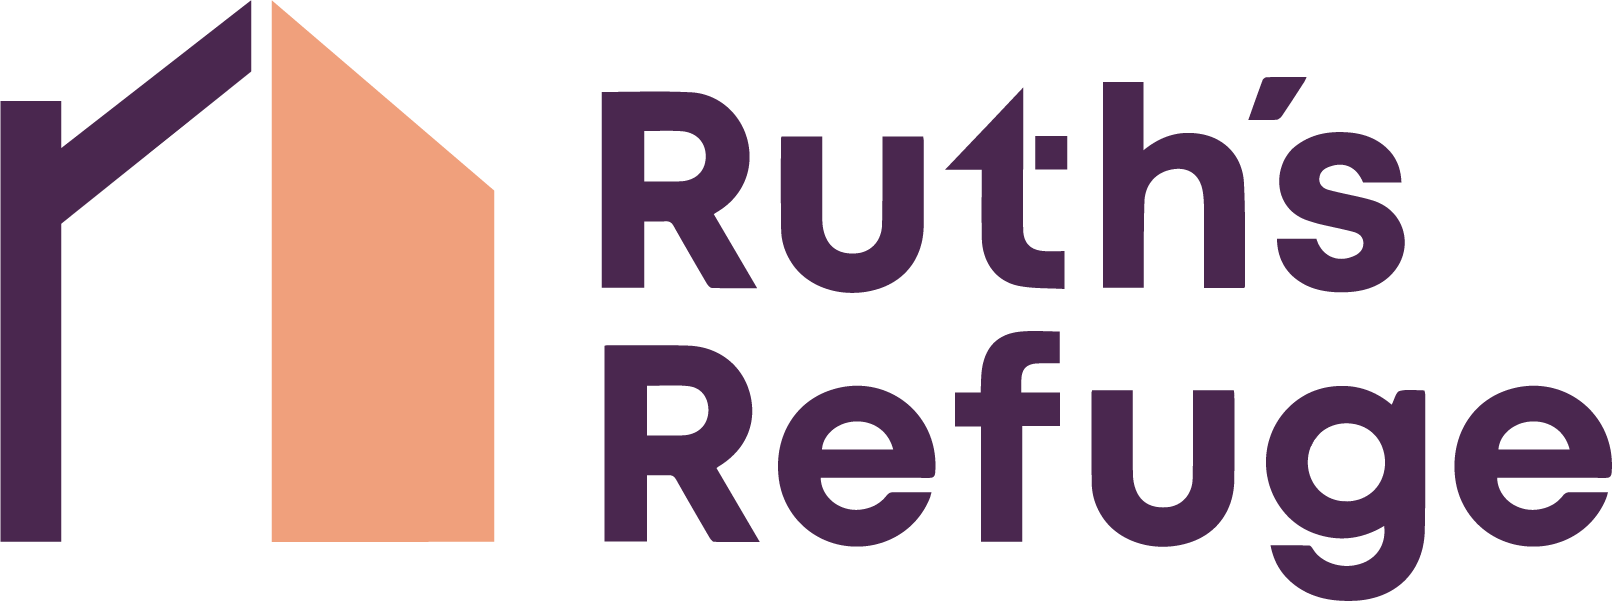 Ruth's Refuge logo